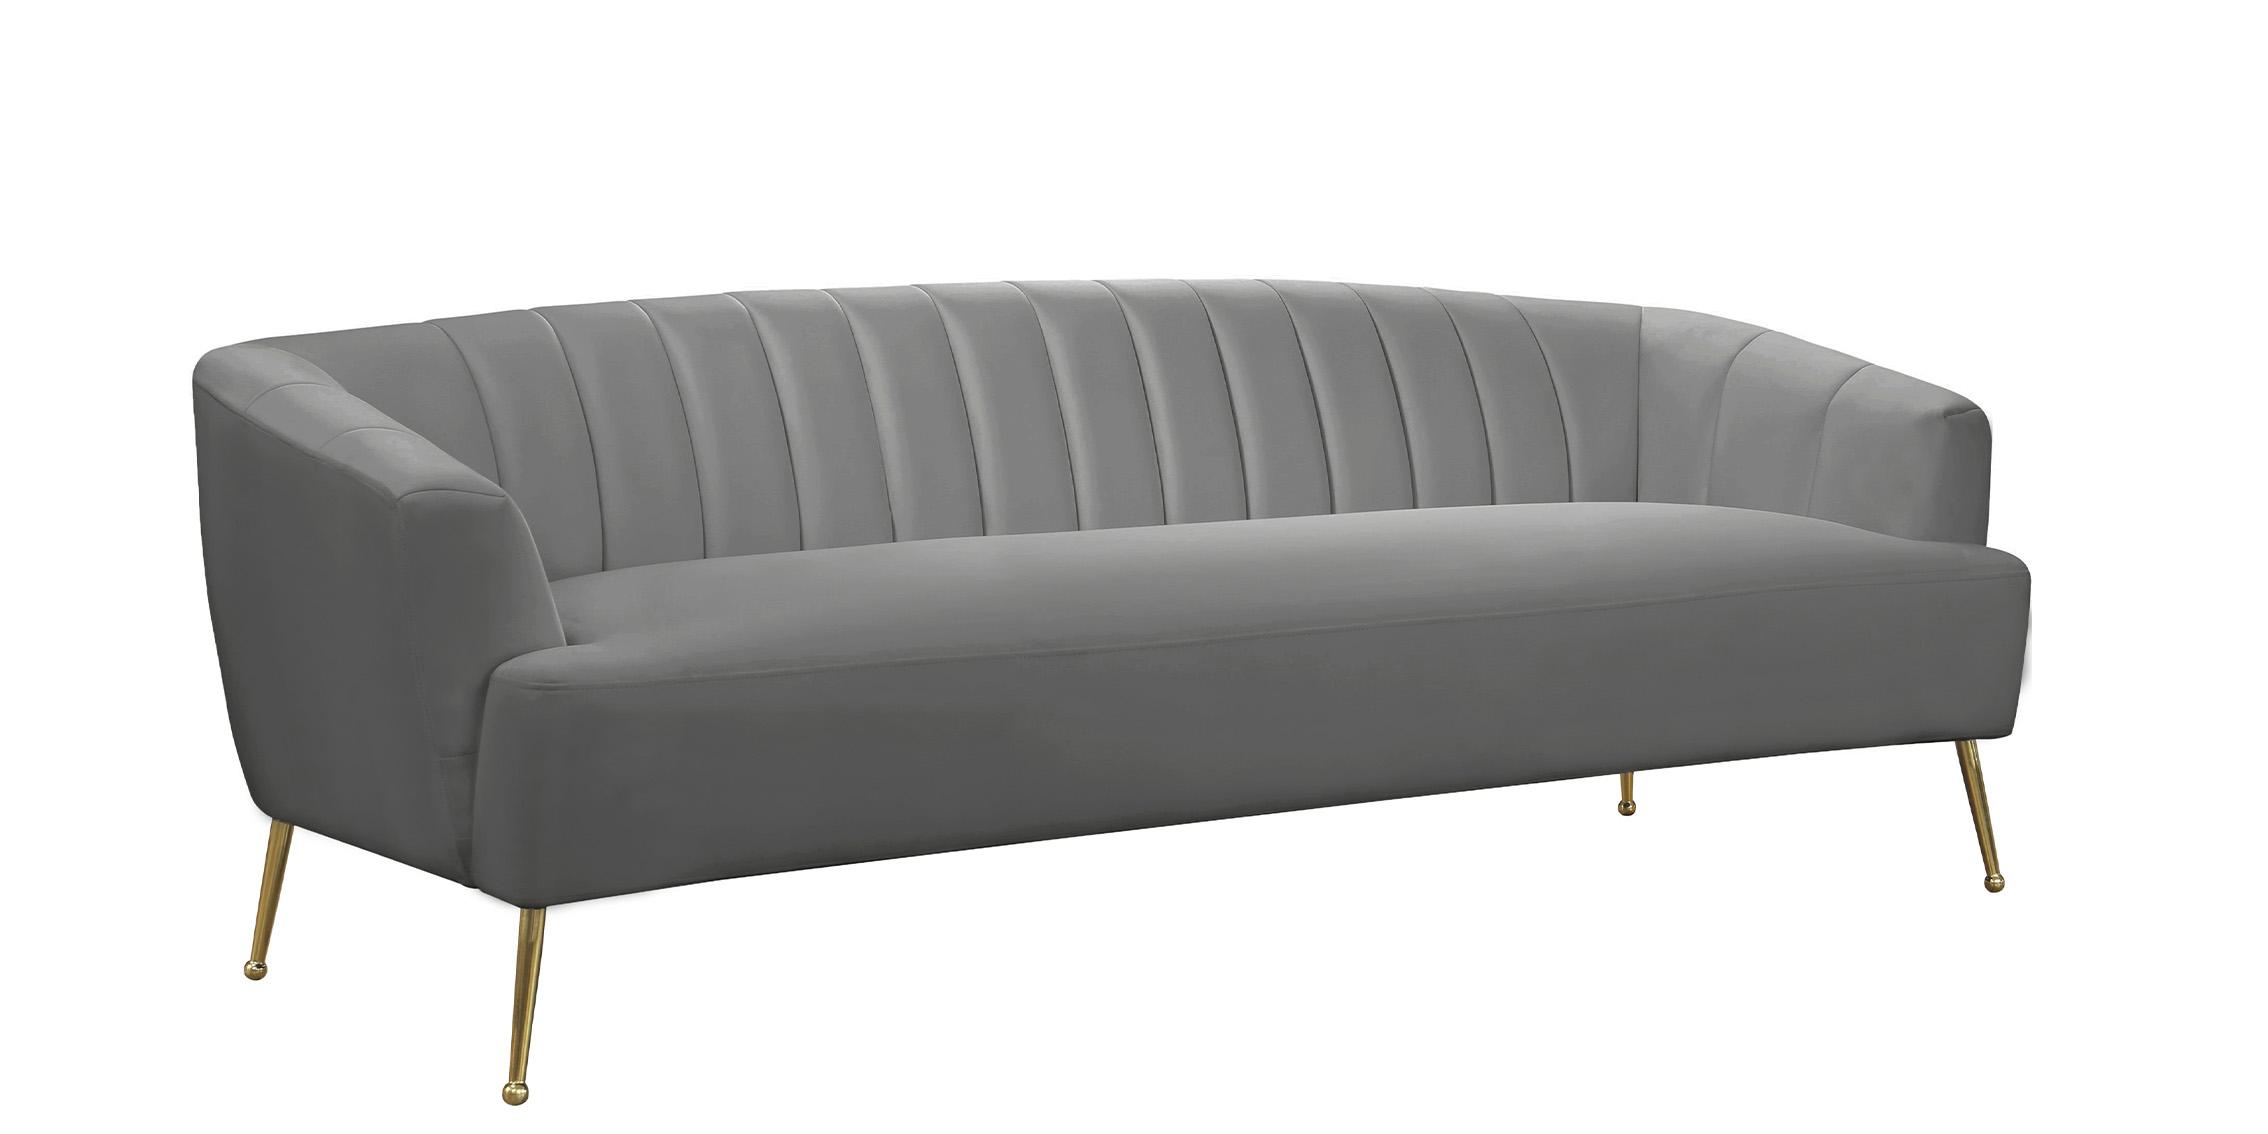 Contemporary, Modern Sofa TORI 657Grey-S 657Grey-S in Gray Velvet